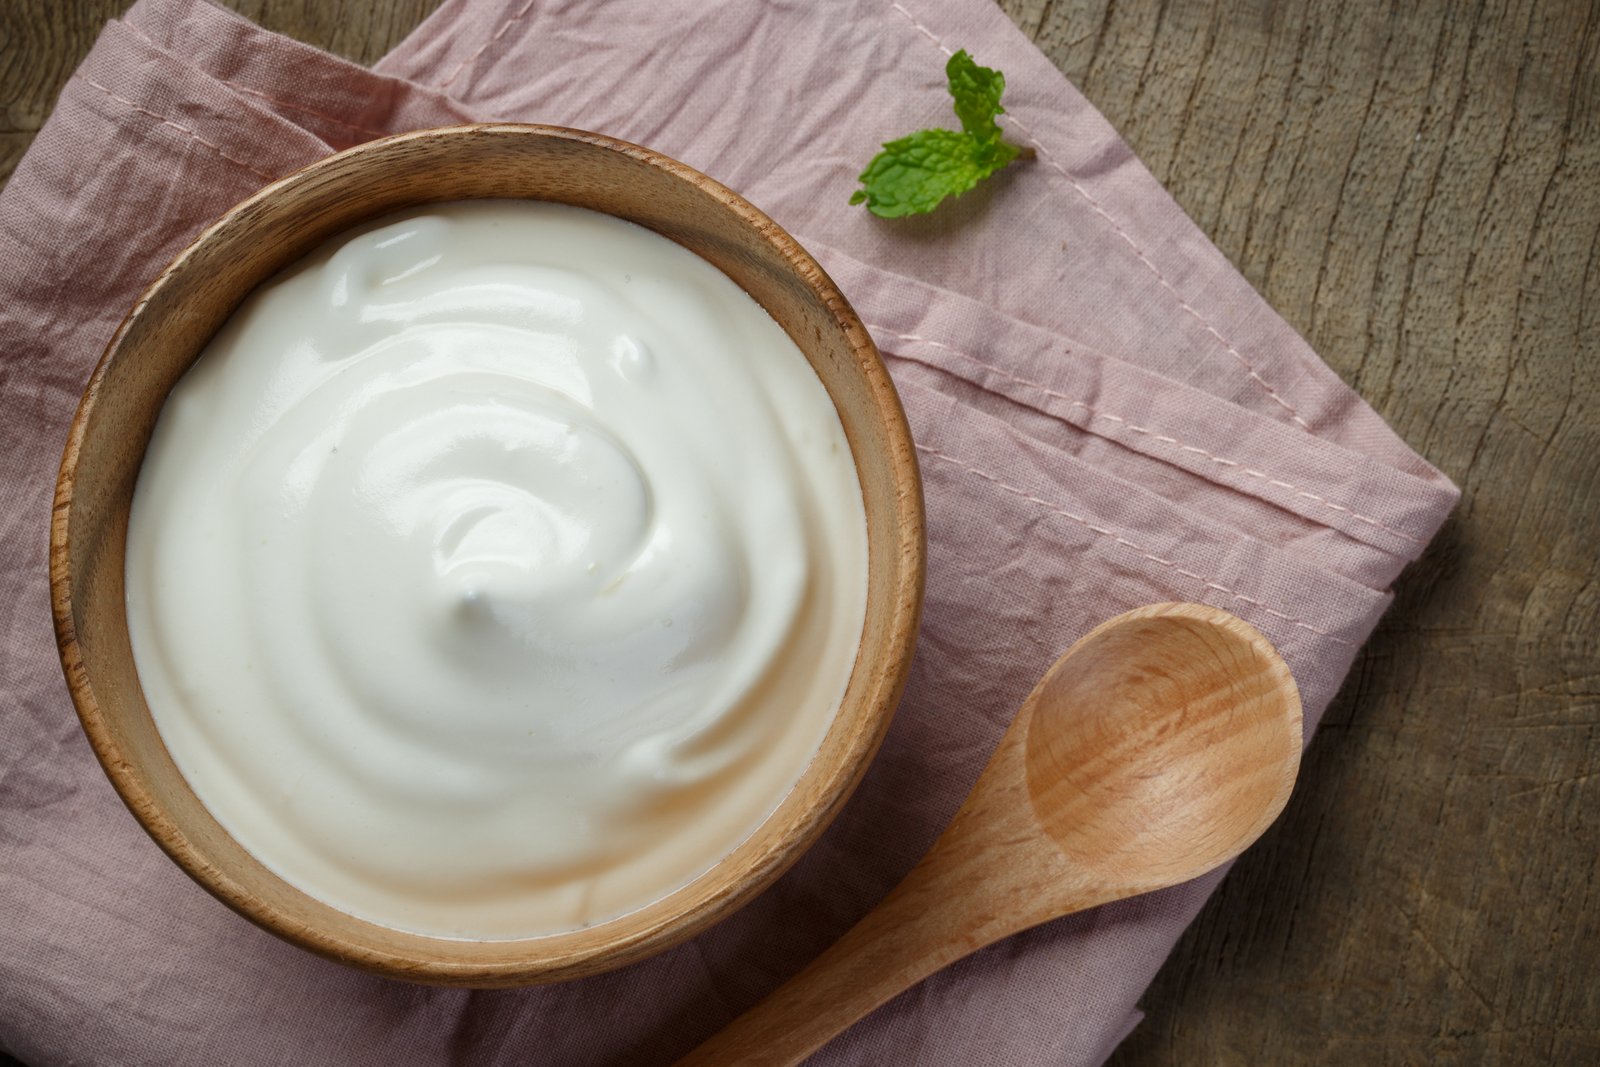 How To Make Homemade Yogurt - Curd